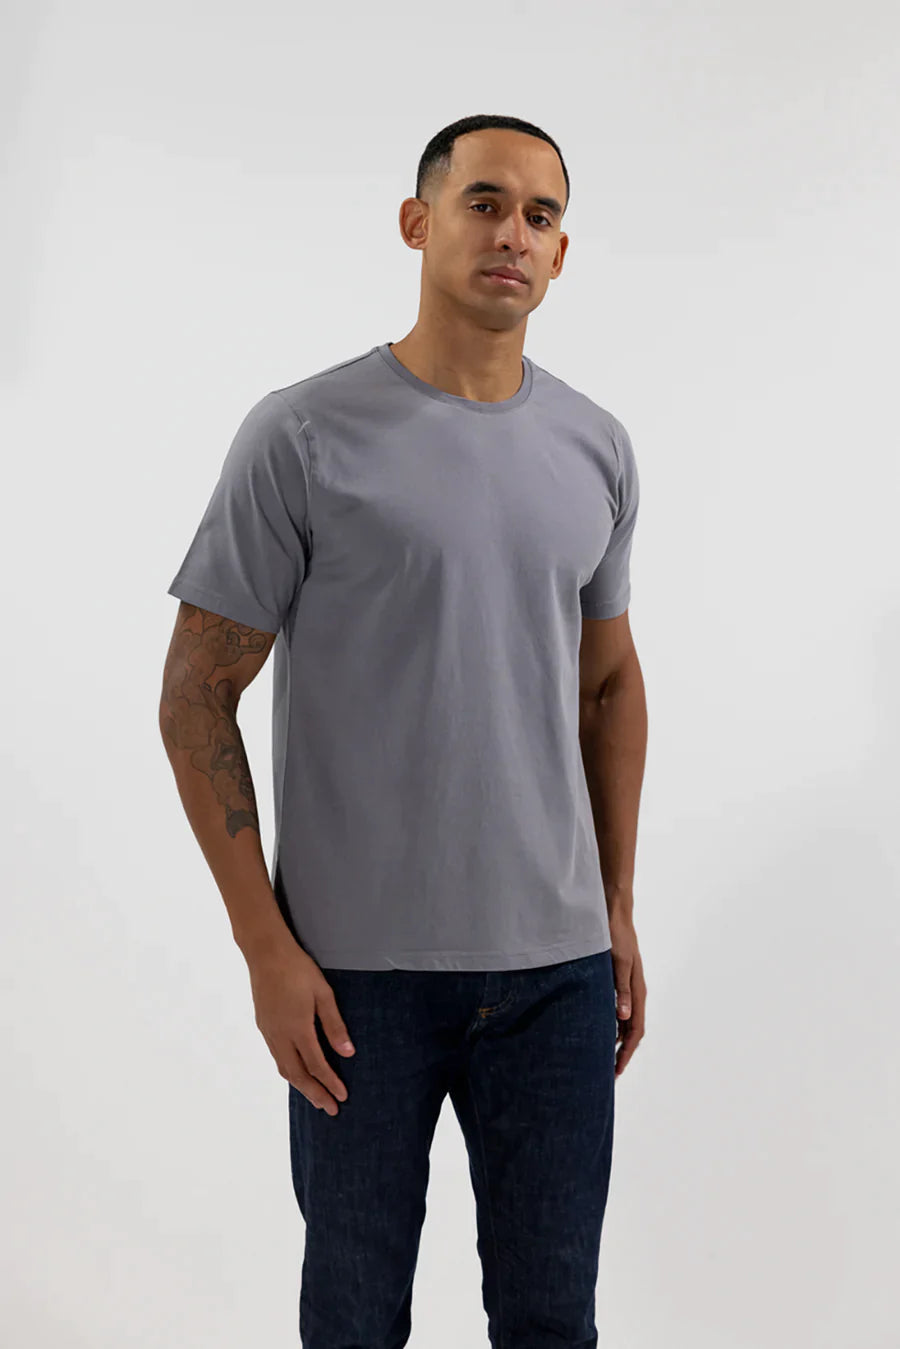 Easy Mondays Crew Neck Cotton T-Shirt-Men&#39;s T-Shirts-Slate-S-Yaletown-Vancouver-Surrey-Canada